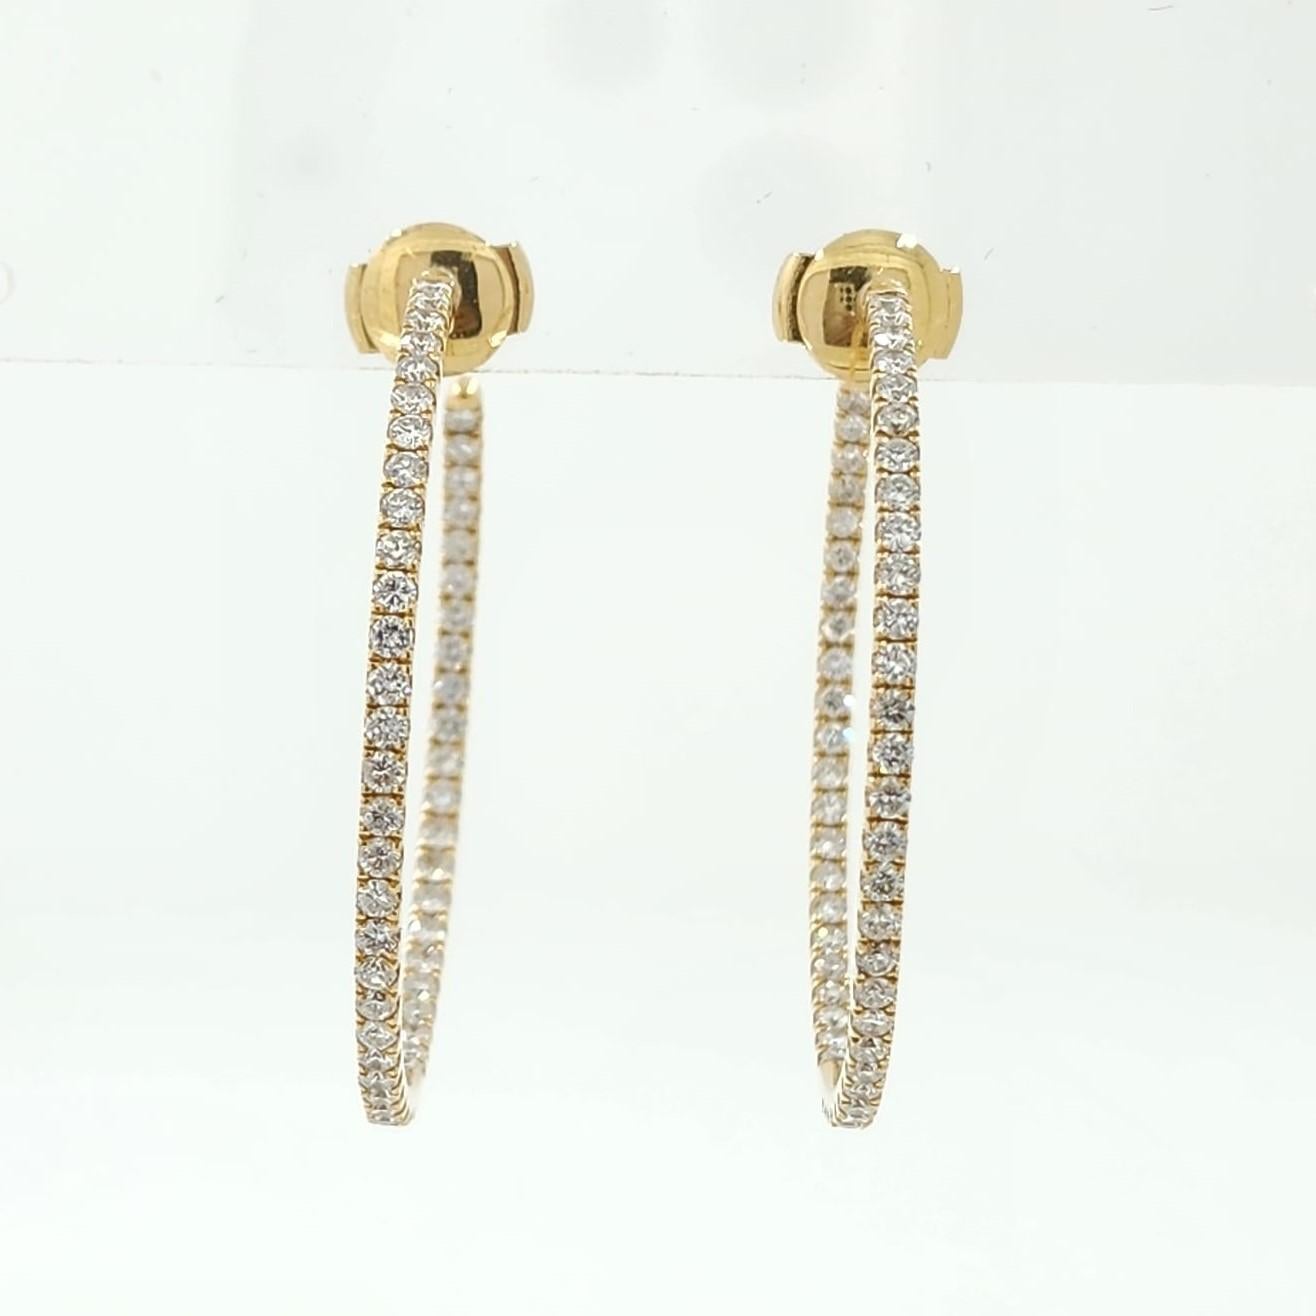 Round Cut 2.09 Carat Diamond Hoop Earrings in 14 Karat Yellow Gold For Sale